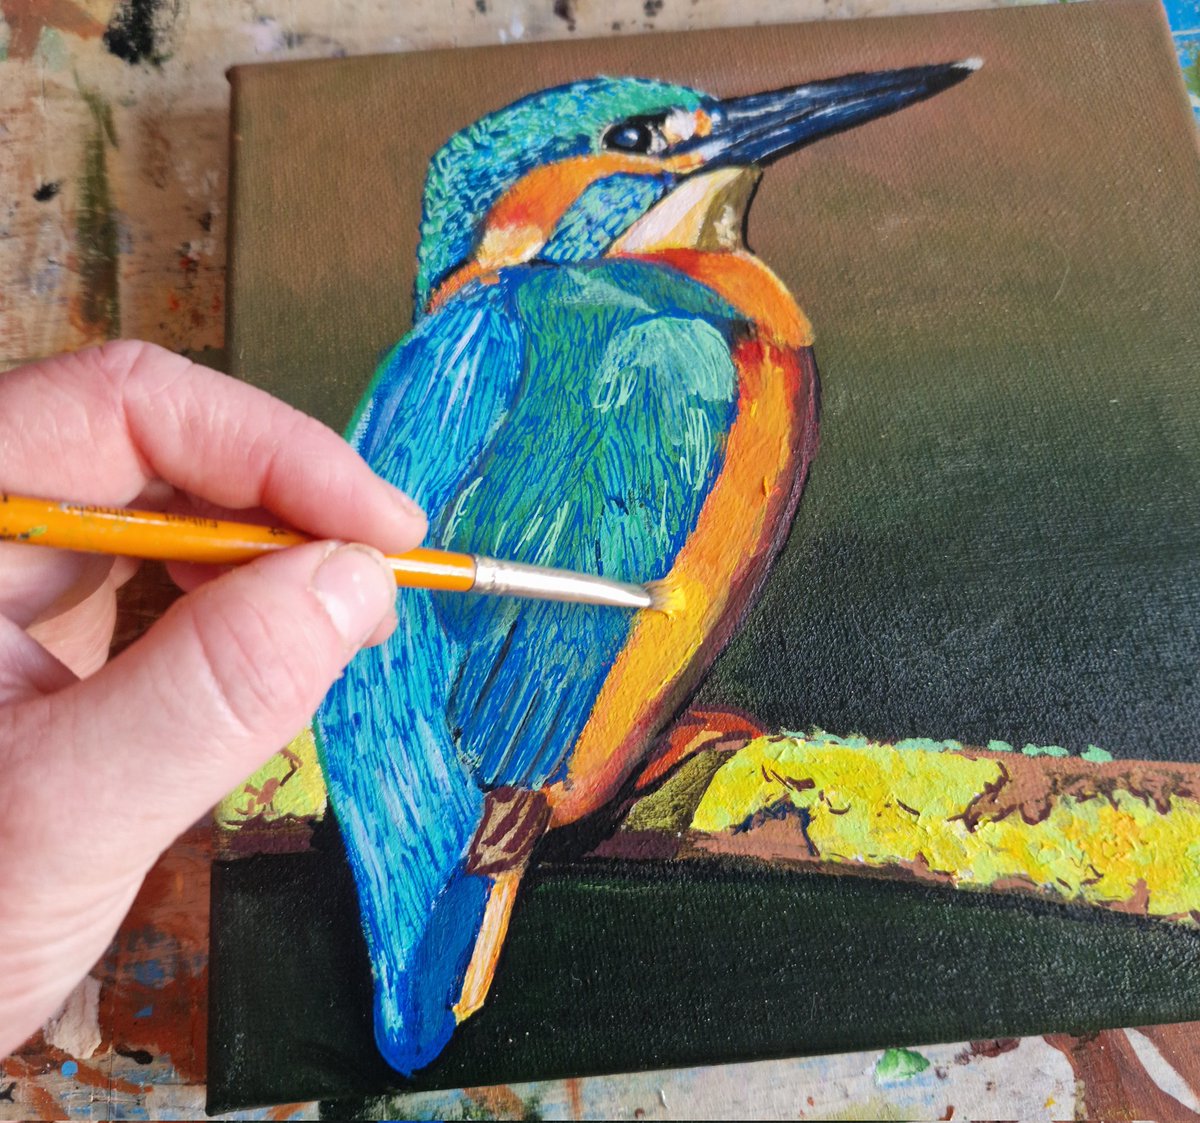 1/6 of my mini canvas art 🥰 What do you think? 😊 #KingfisherArt #CanvasPainting #NatureInspired #BirdArt #SmallArtwork #ArtisticExpression #WildlifePainting #ColorfulBird #ArtLovers #ArtisticCommunity #FineArt #MiniatureArt #TinyCanvas #ArtisticCreation #ArtisticJourney #Bird